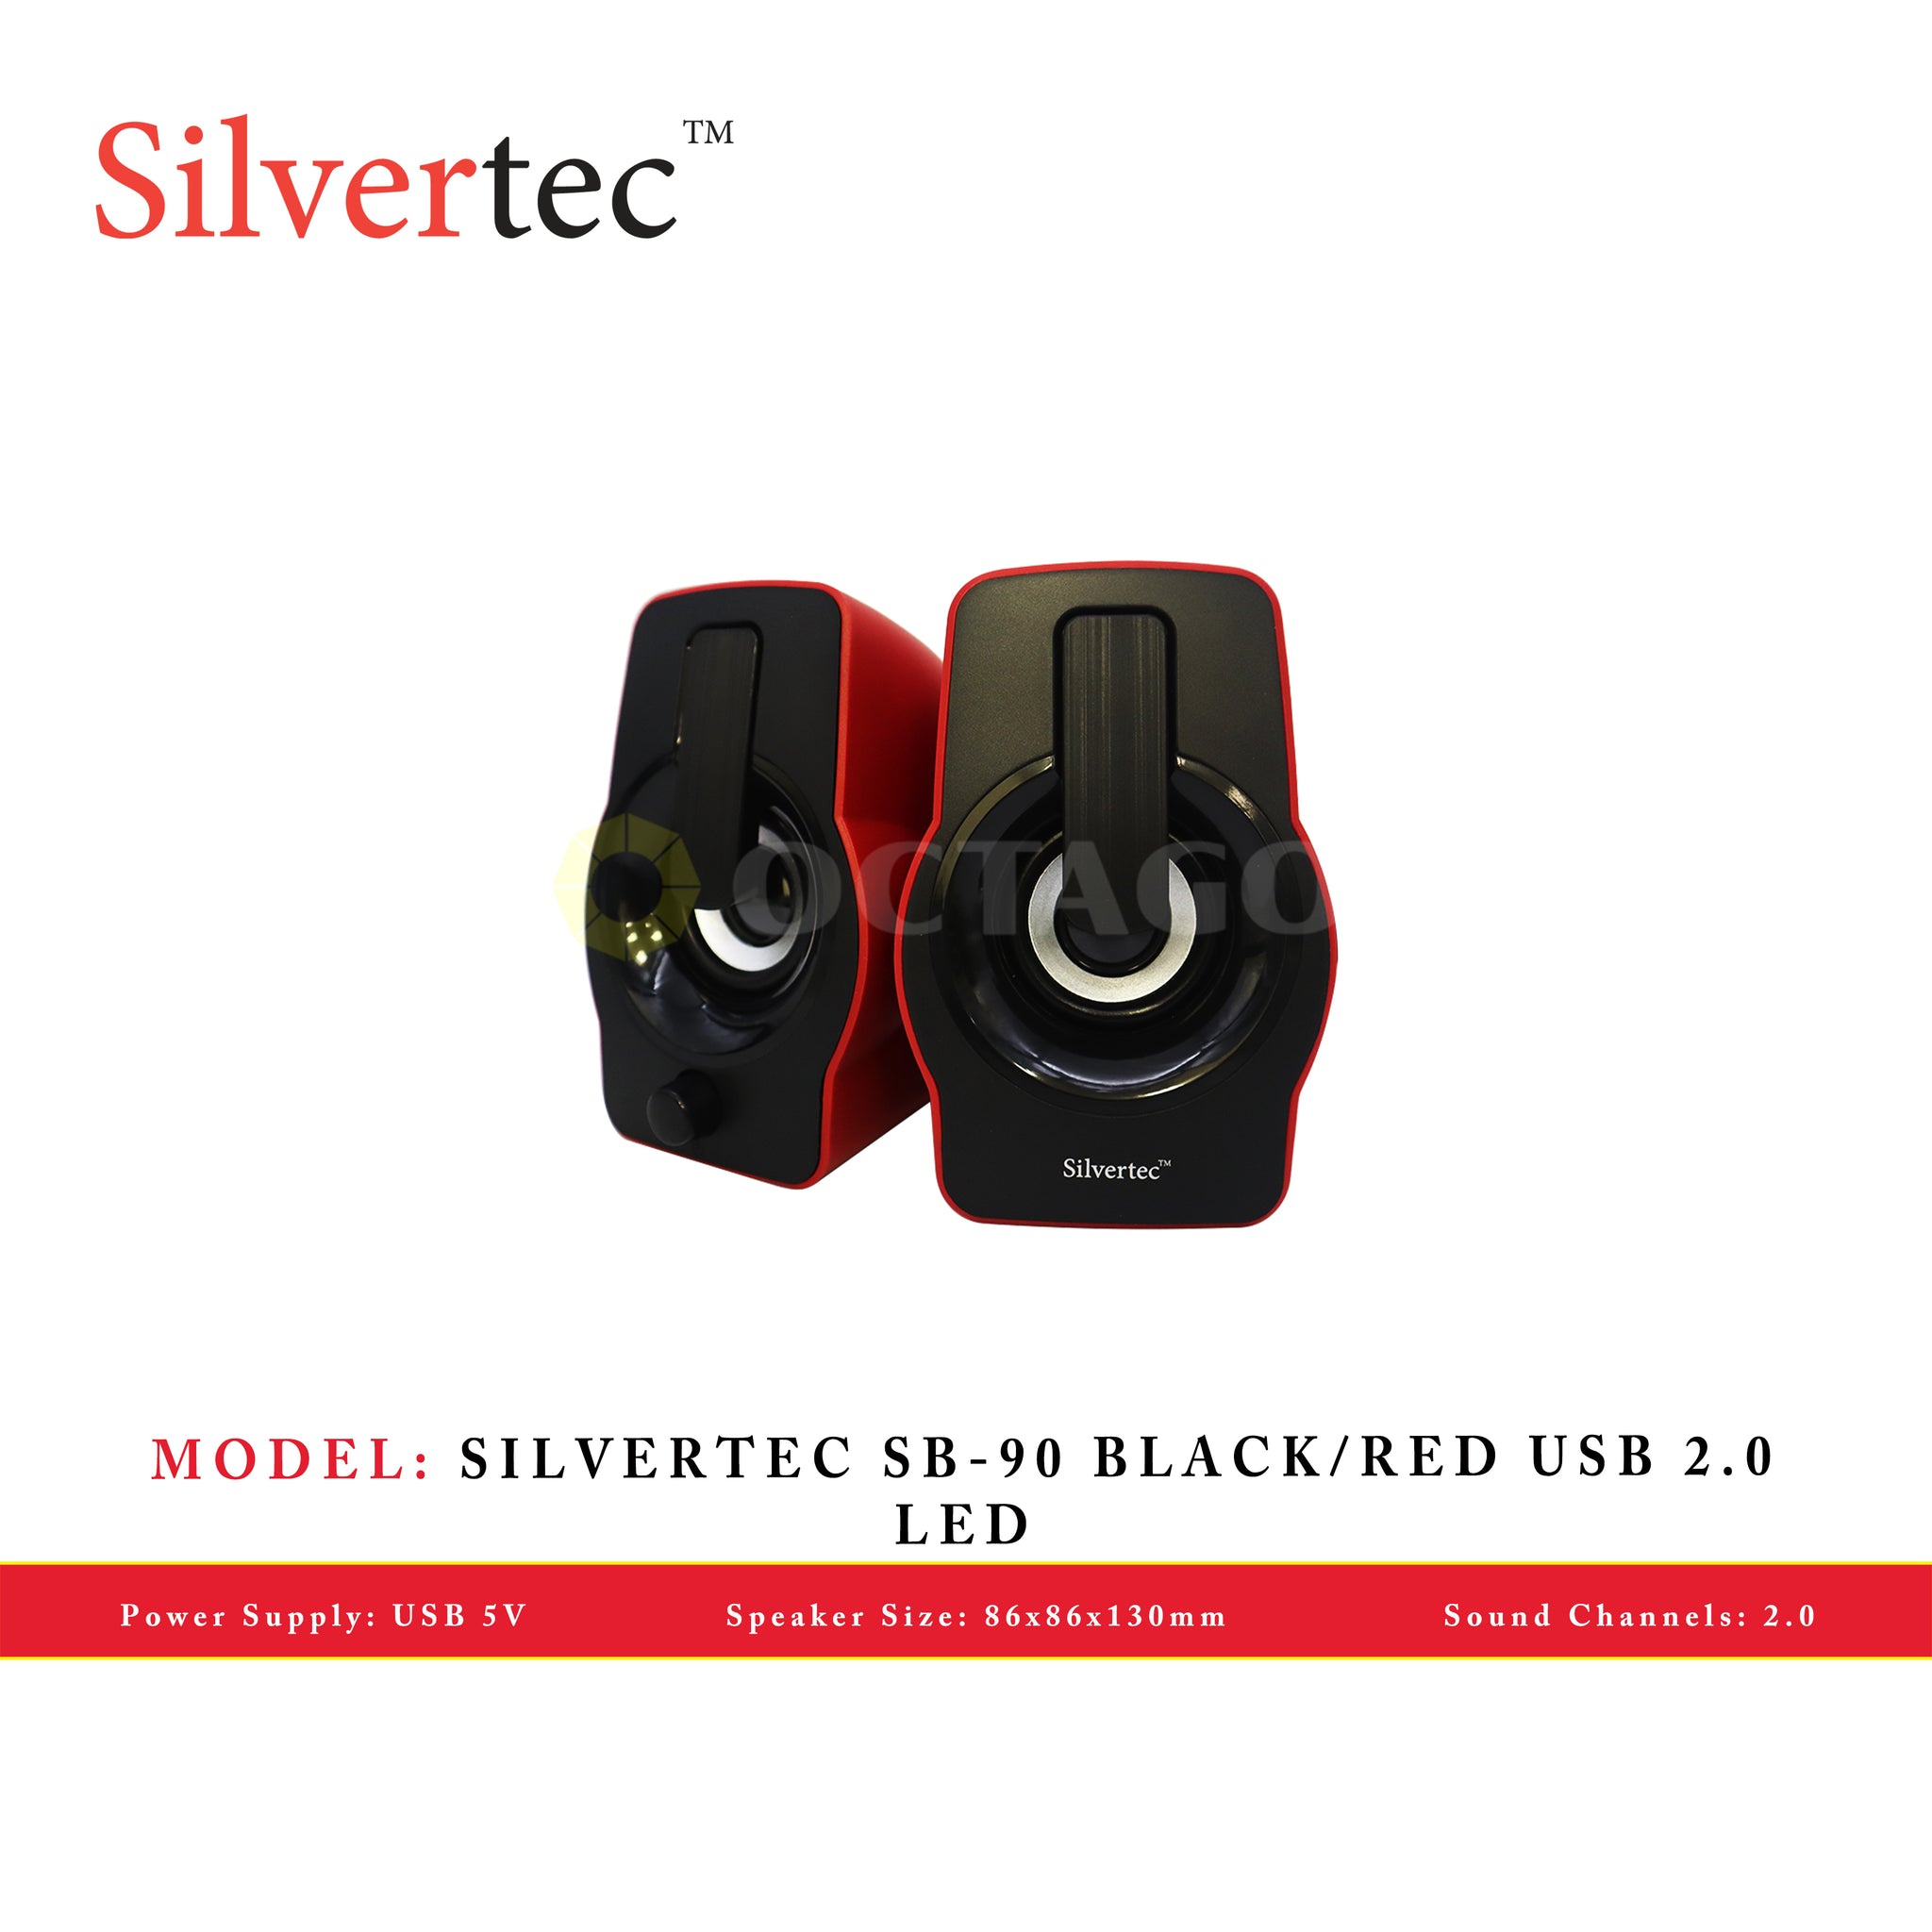 SILVERTEC SB-90 BLACK/RED USB 2.0 LED